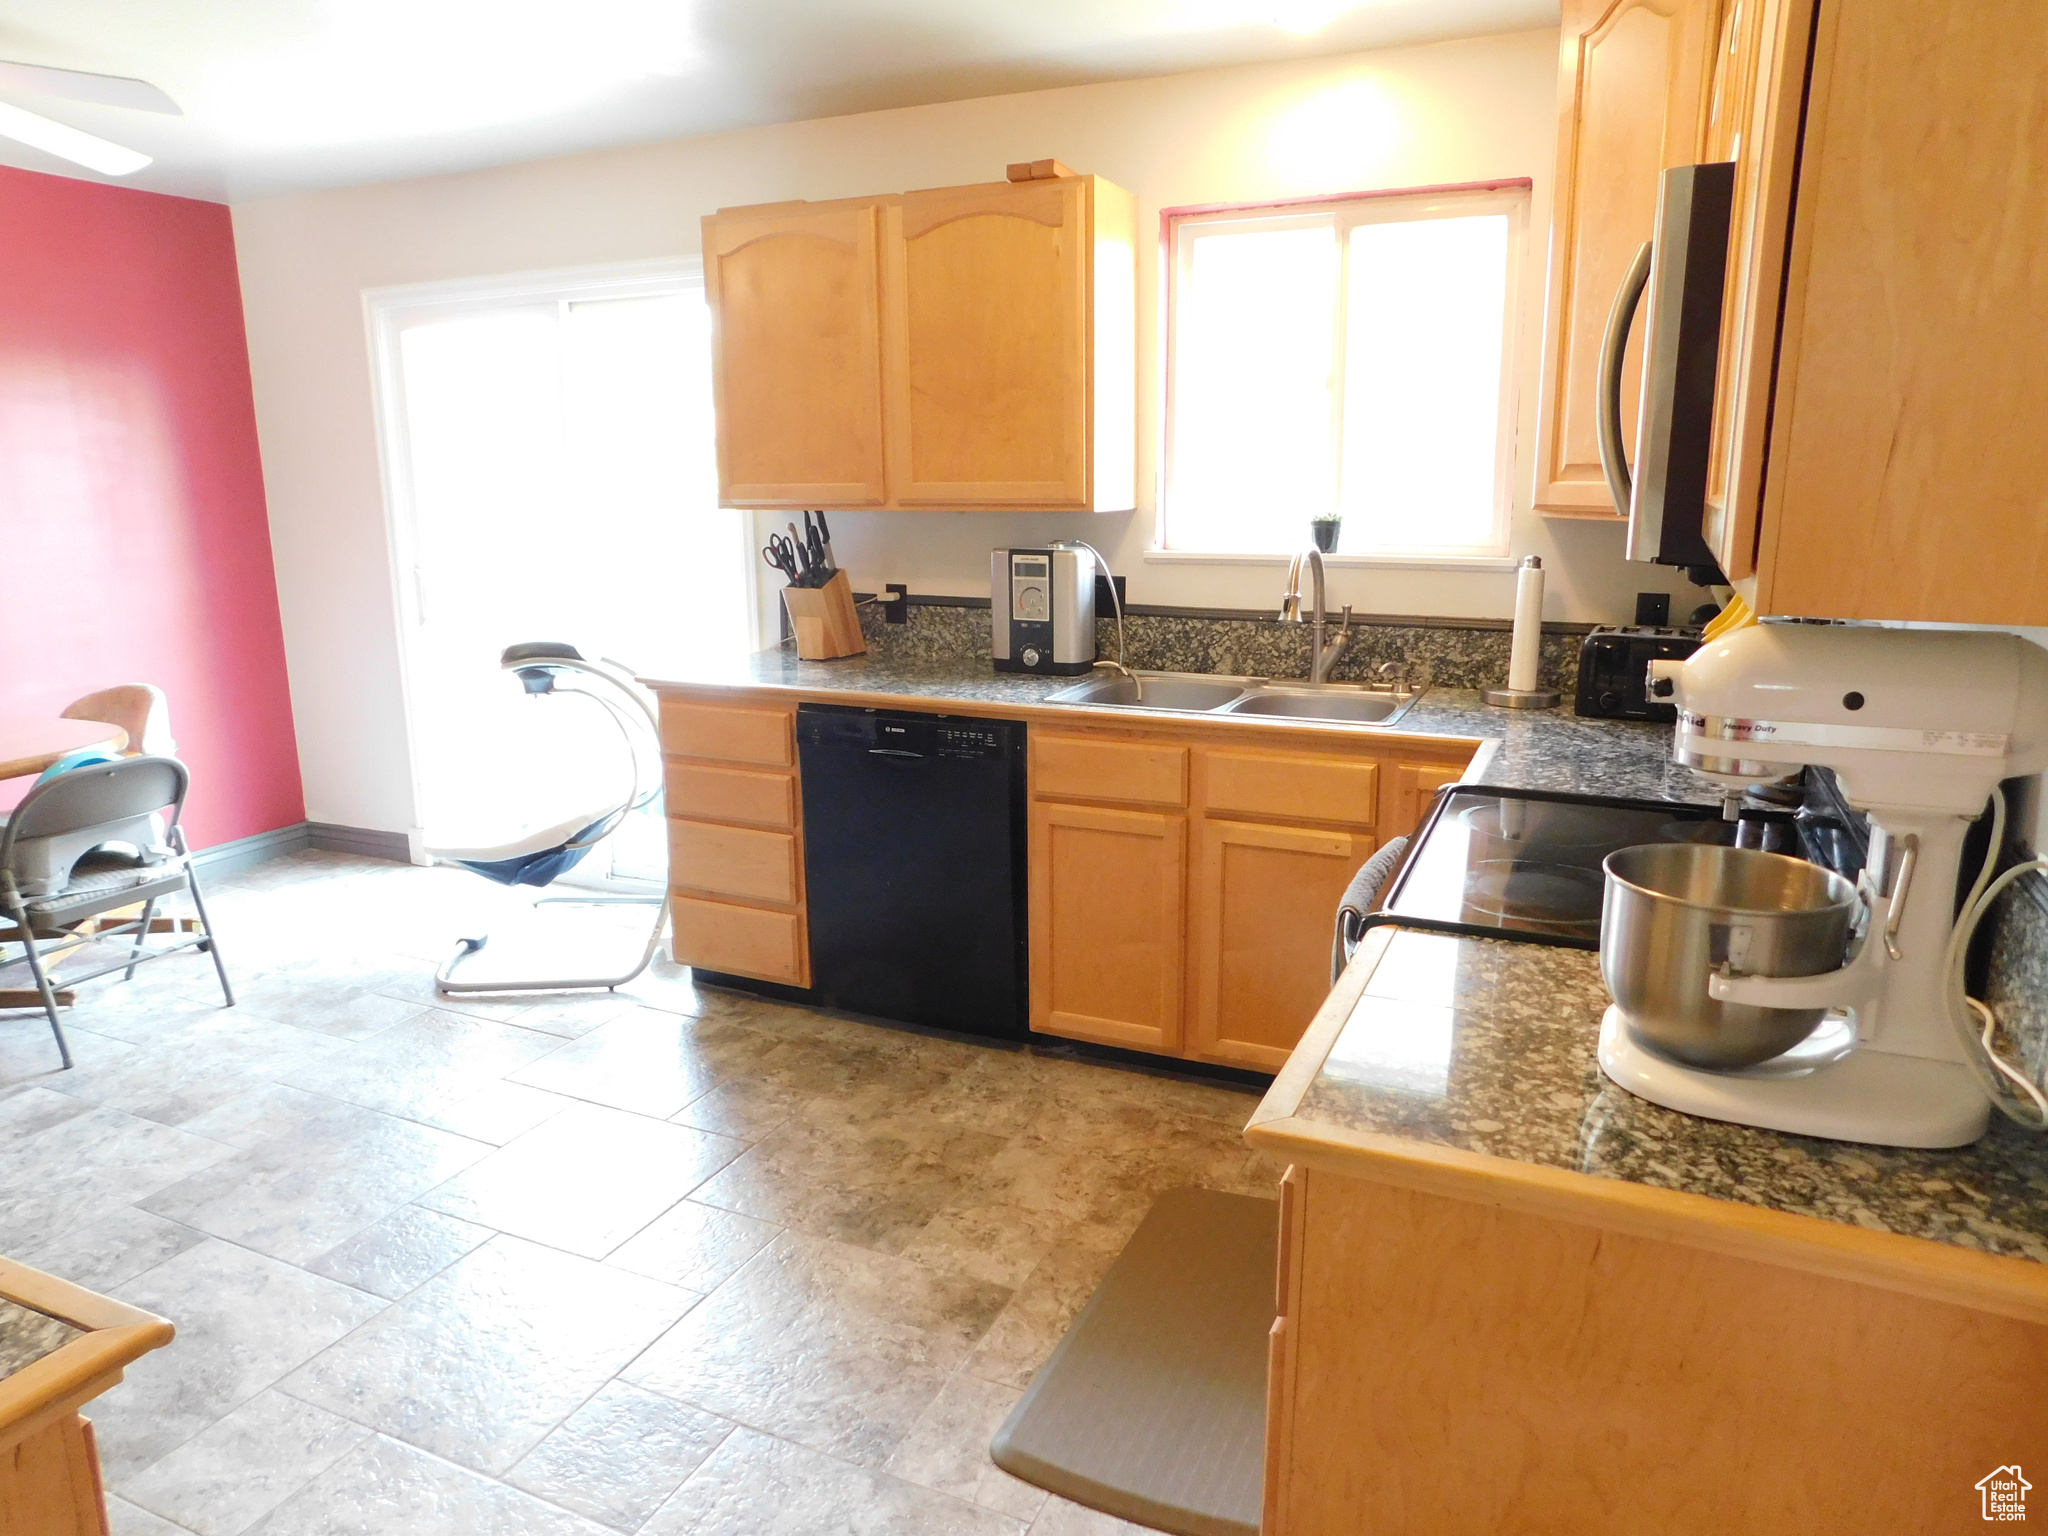 Kitchen with ceiling fan, range, sink, dishwasher, and light tile flooring